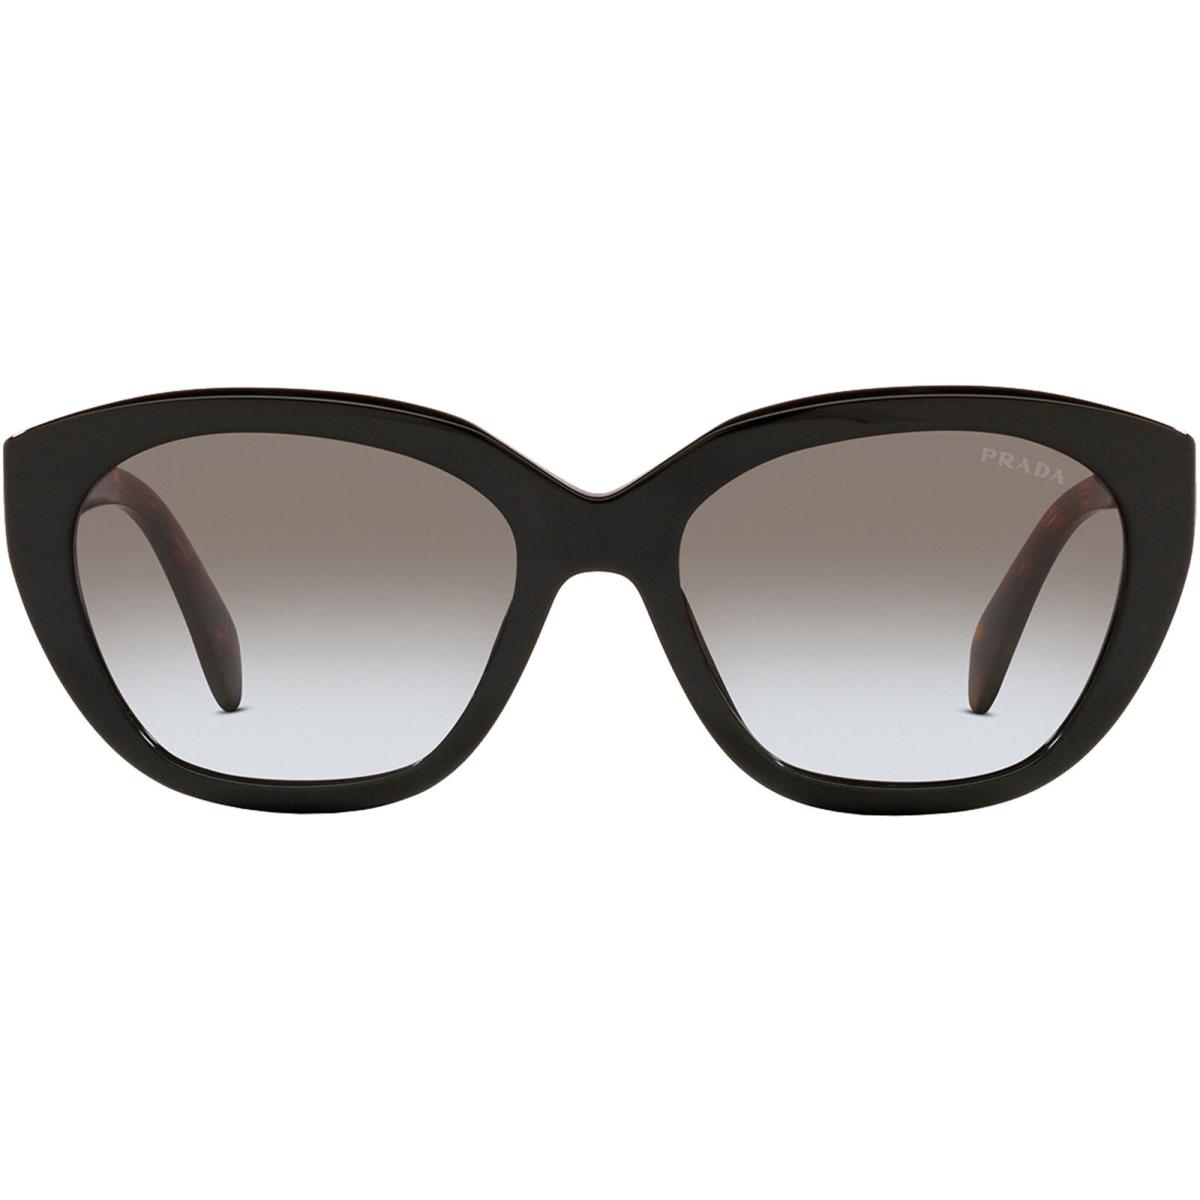 Prada Women`s Black Squared Cat Eye Sunglasses PR16XS-3890A7-56 - Made In Italy - Frame: Black, Lens: Gray